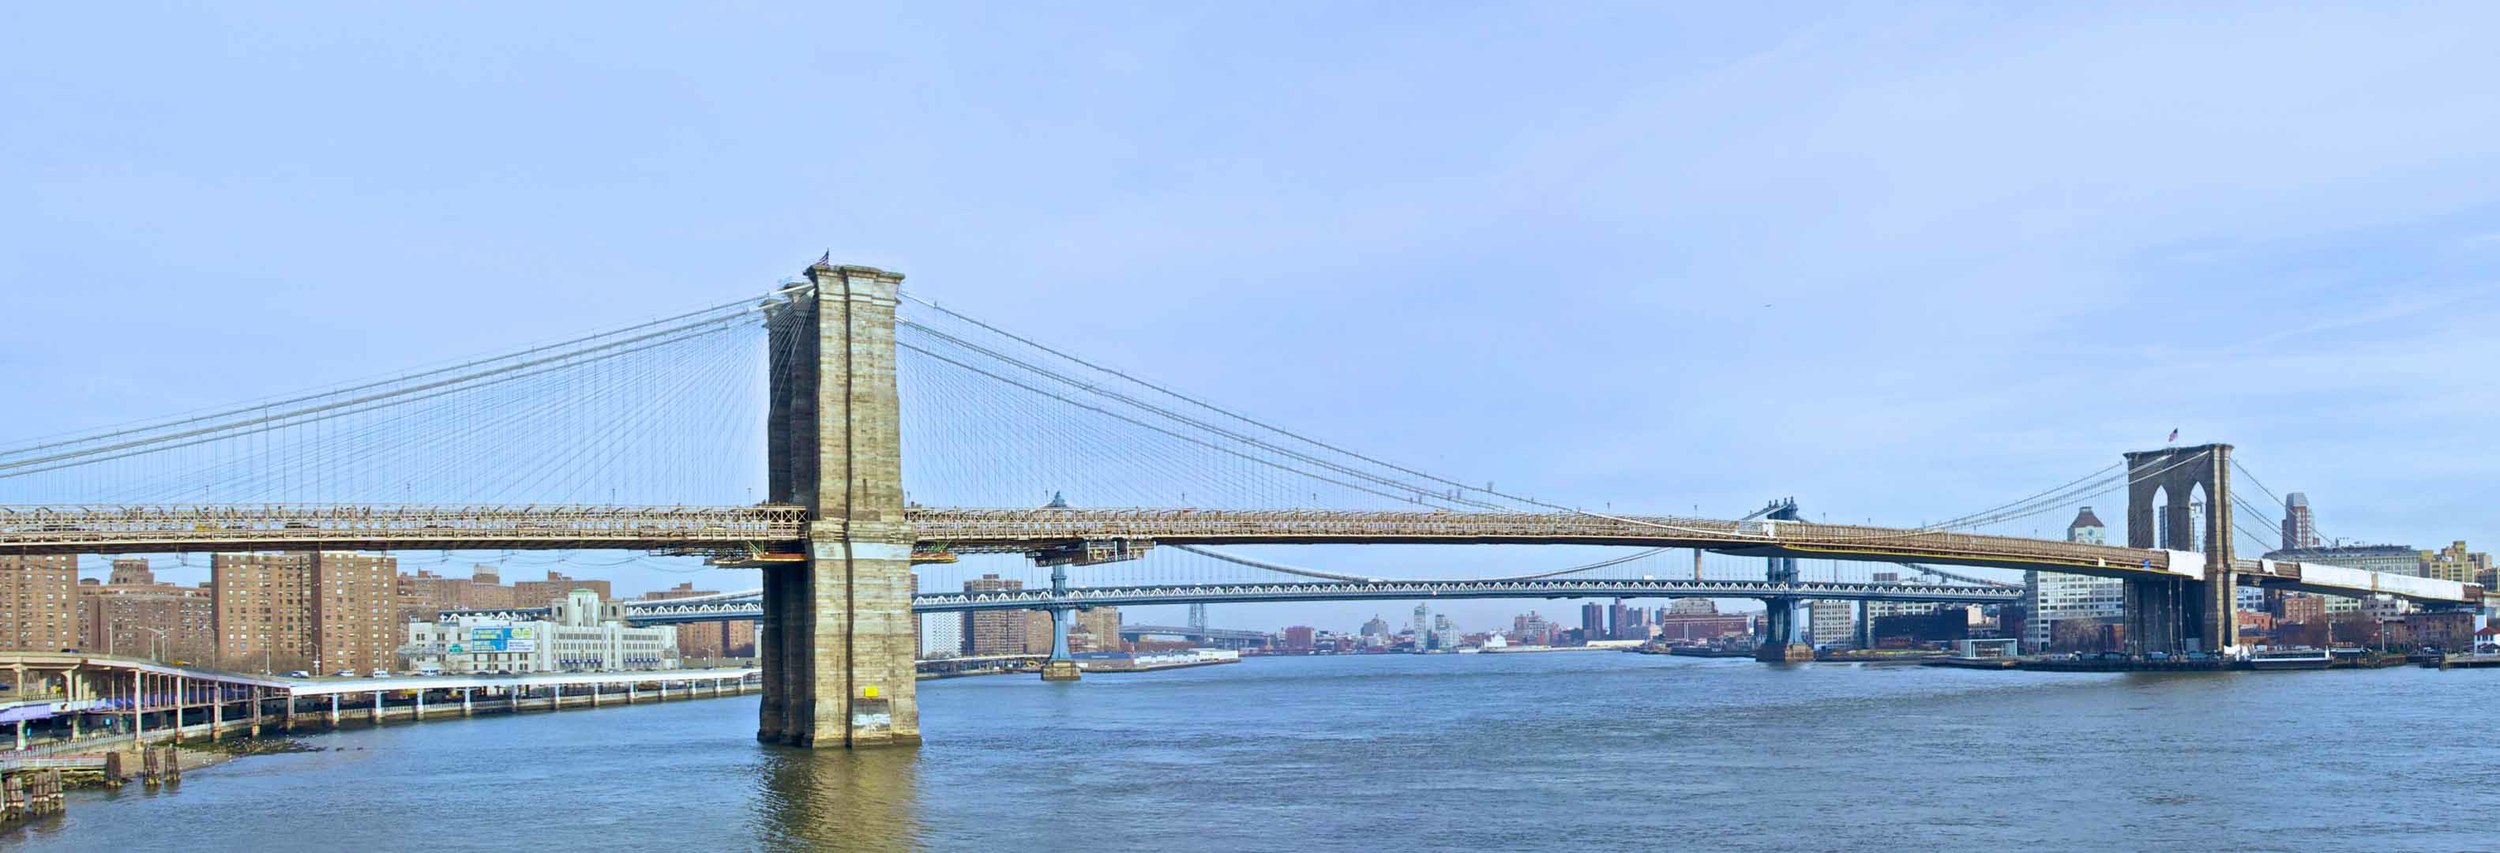 Bk bridge nyc new york manhattan brooklyn usa america east river.jpg